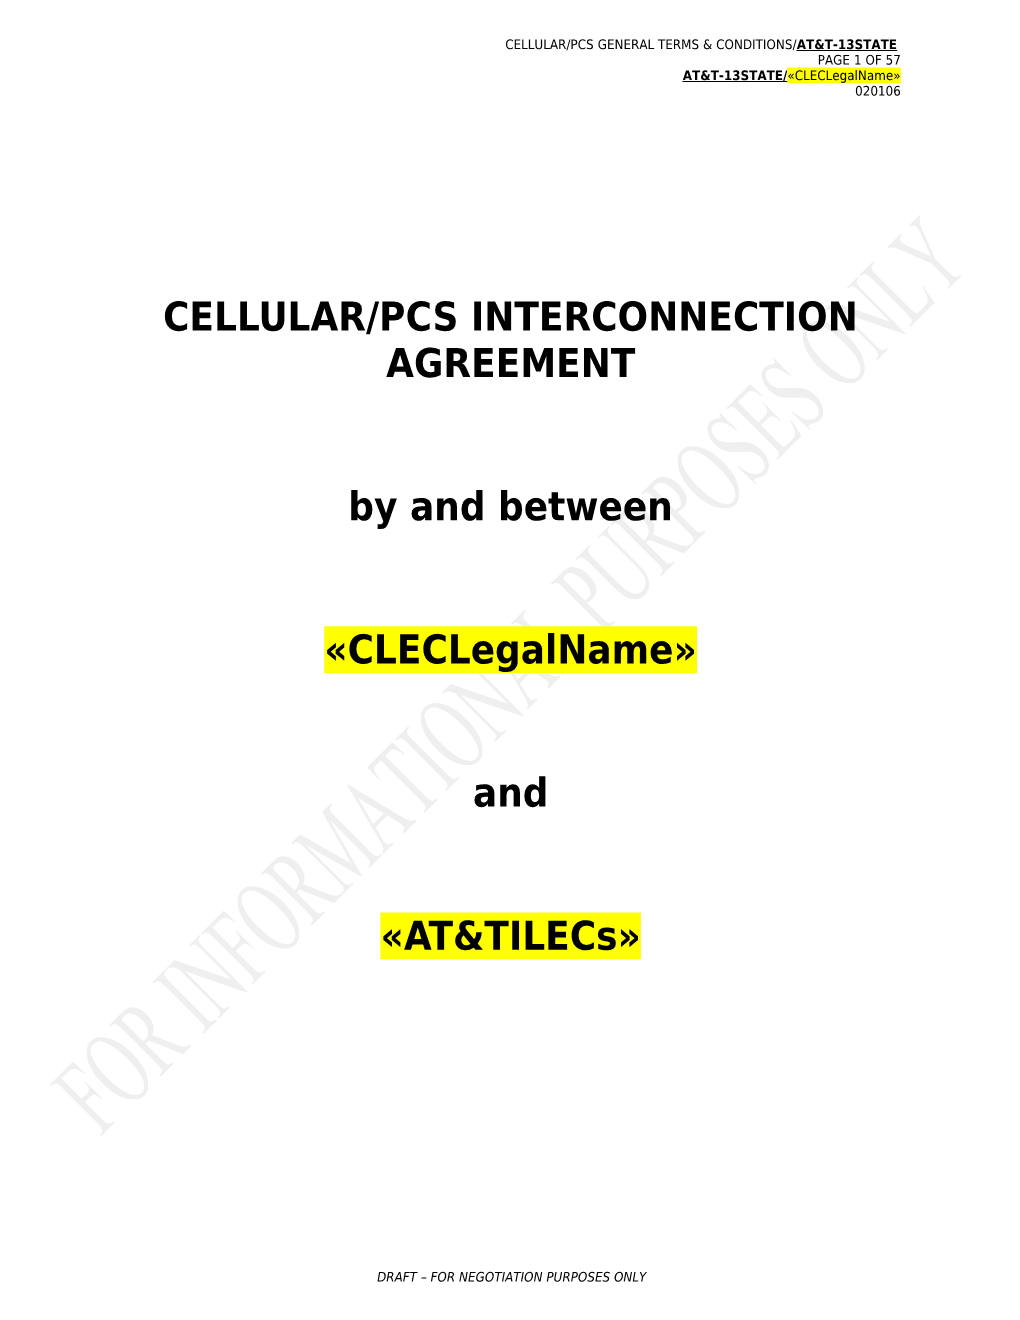 Cellular/Pcs Interconnection Agreement